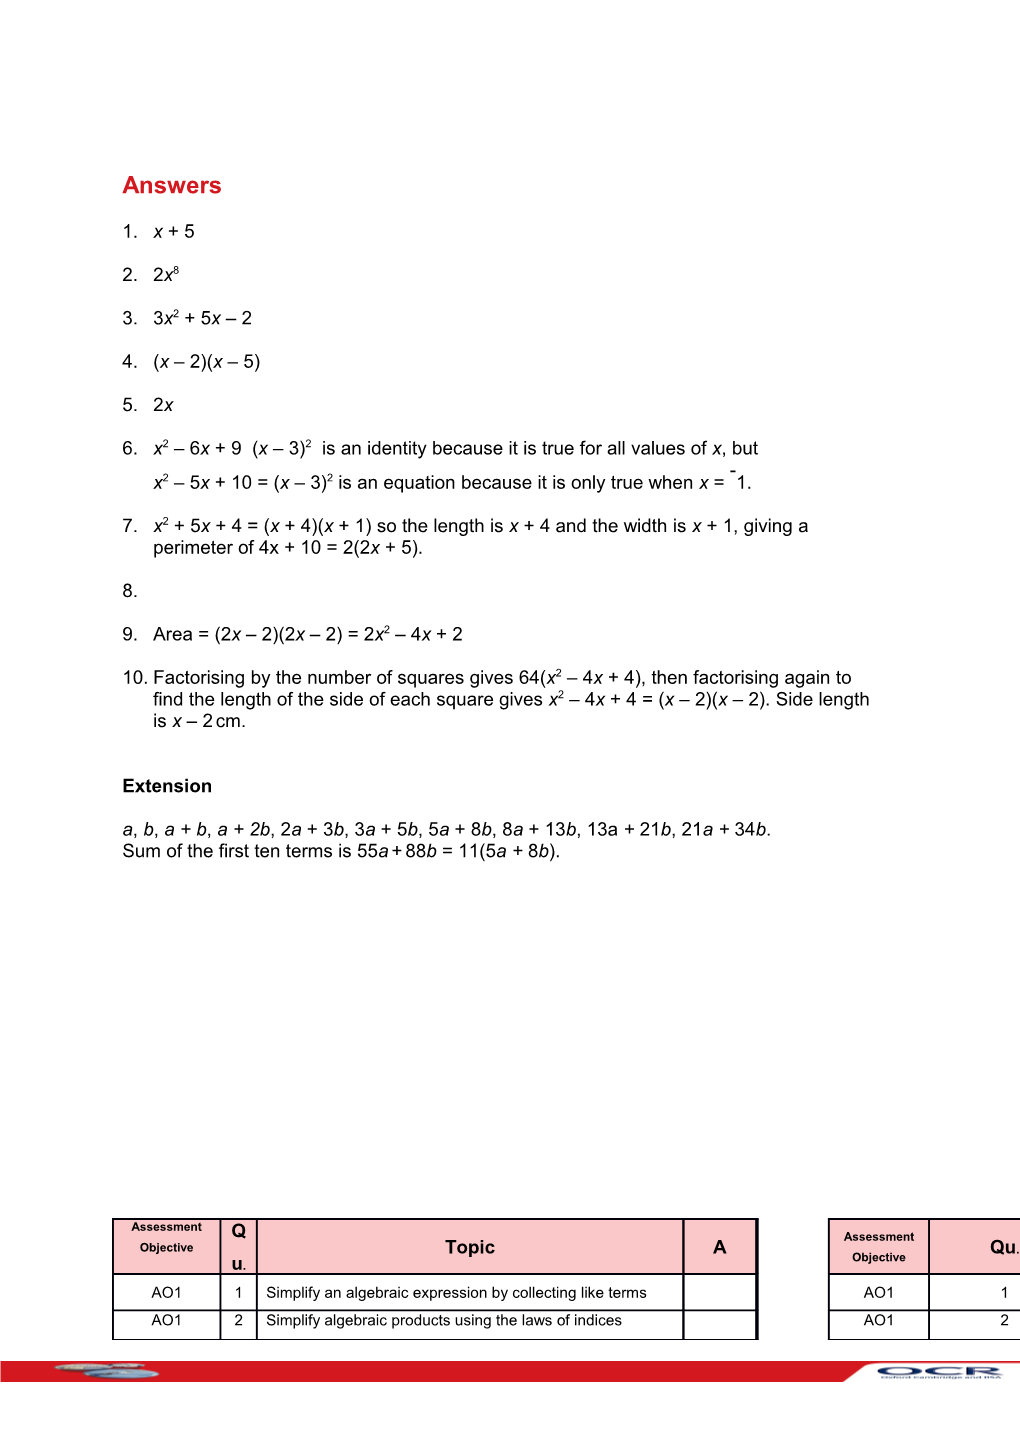 GCSE (9-1) Mathematics,Foundation Check in - 6.01 Algebraic Expressions